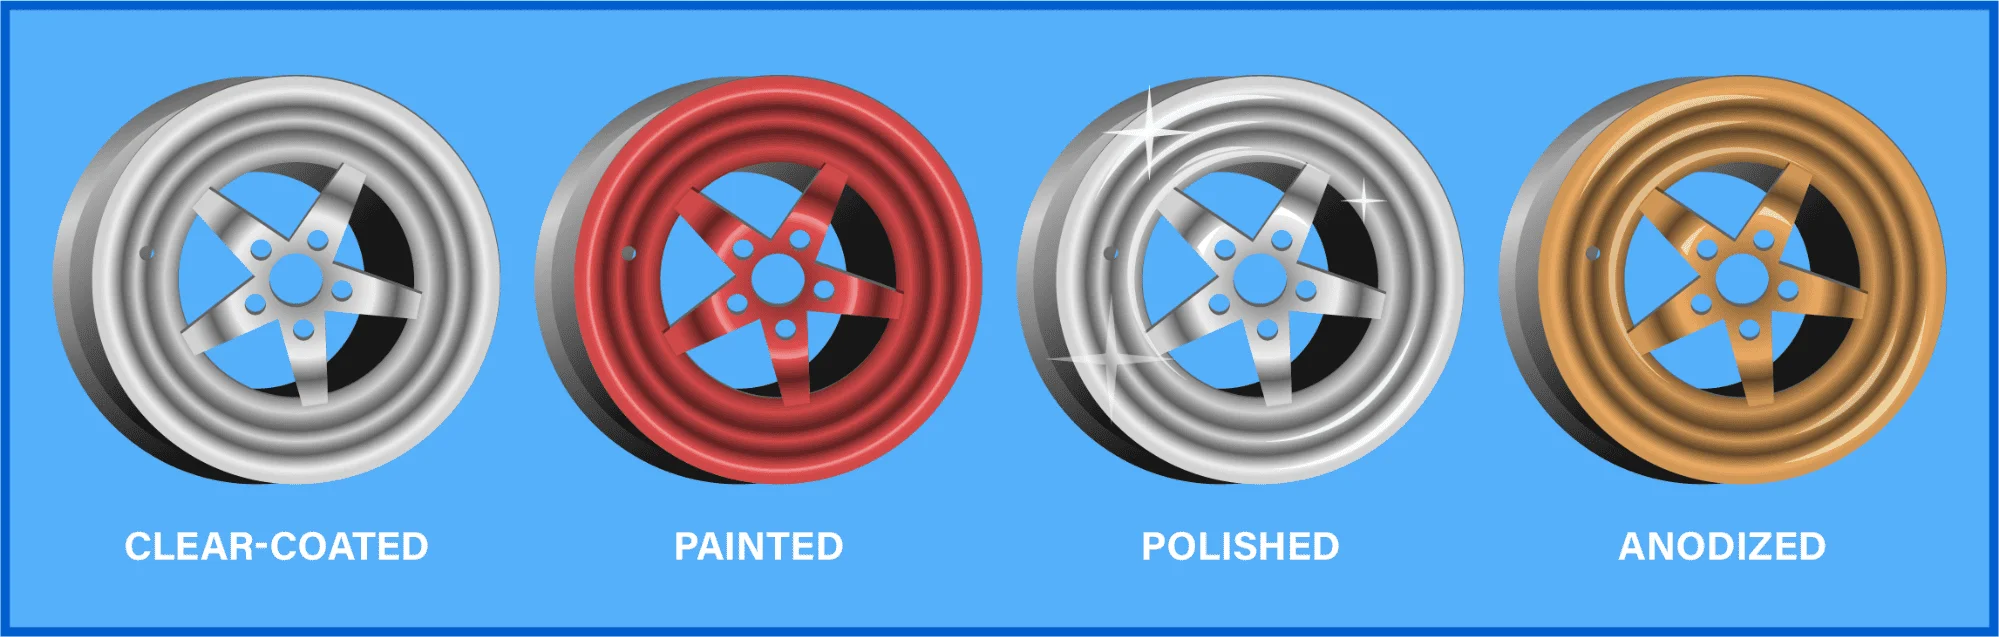 Aluminum Wheel Cleaner, Aluminum Wheel Polish